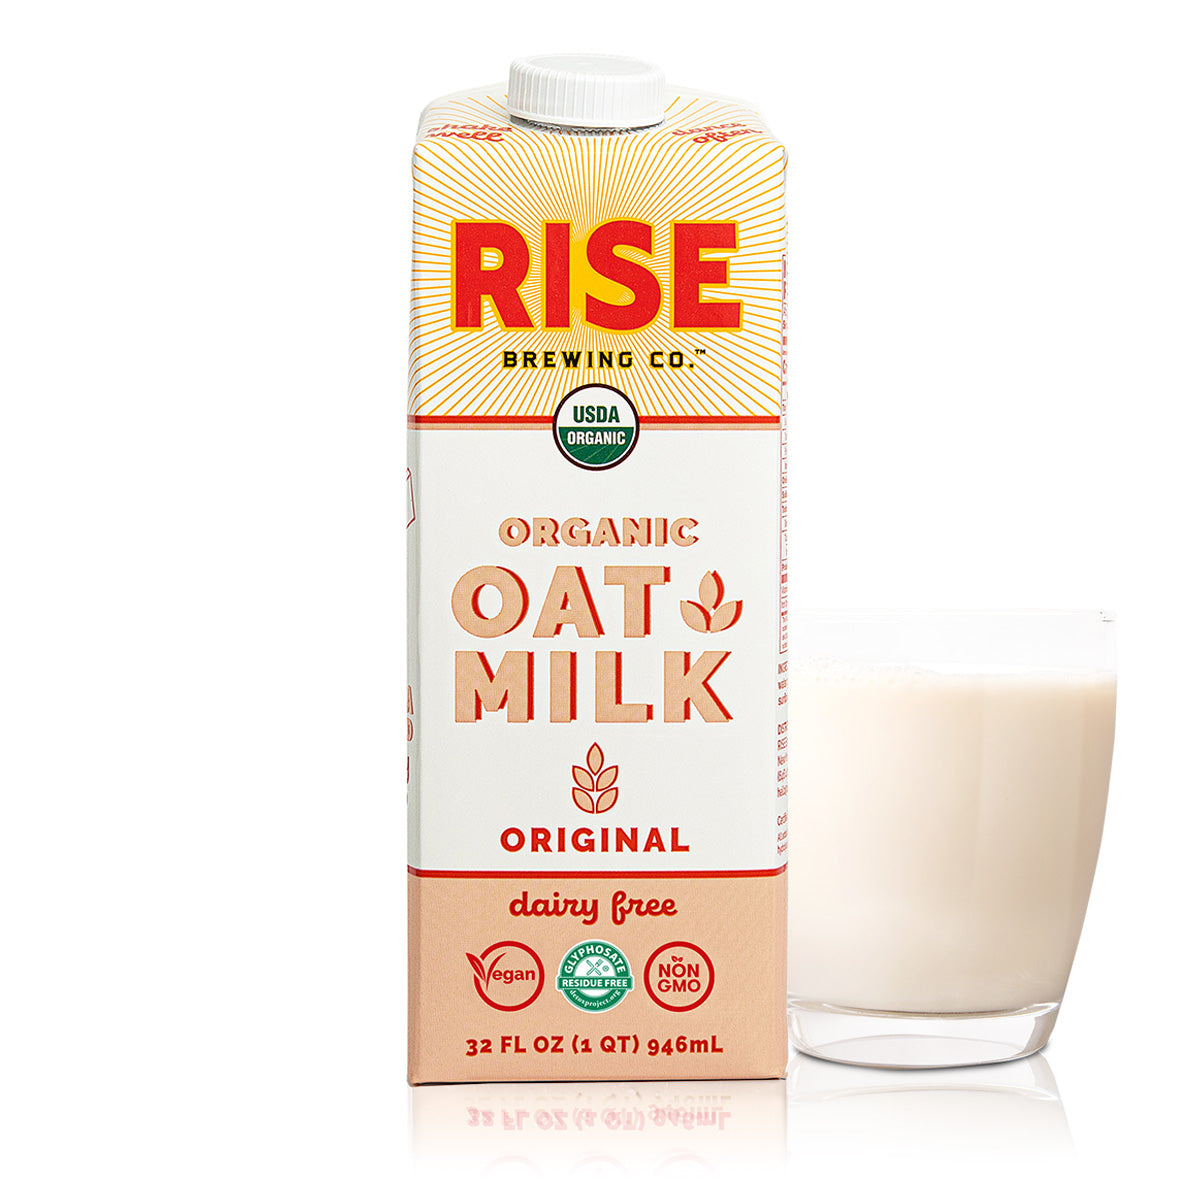 RISE Brewing Co. Organic Oat Milk Variety Pack - Original